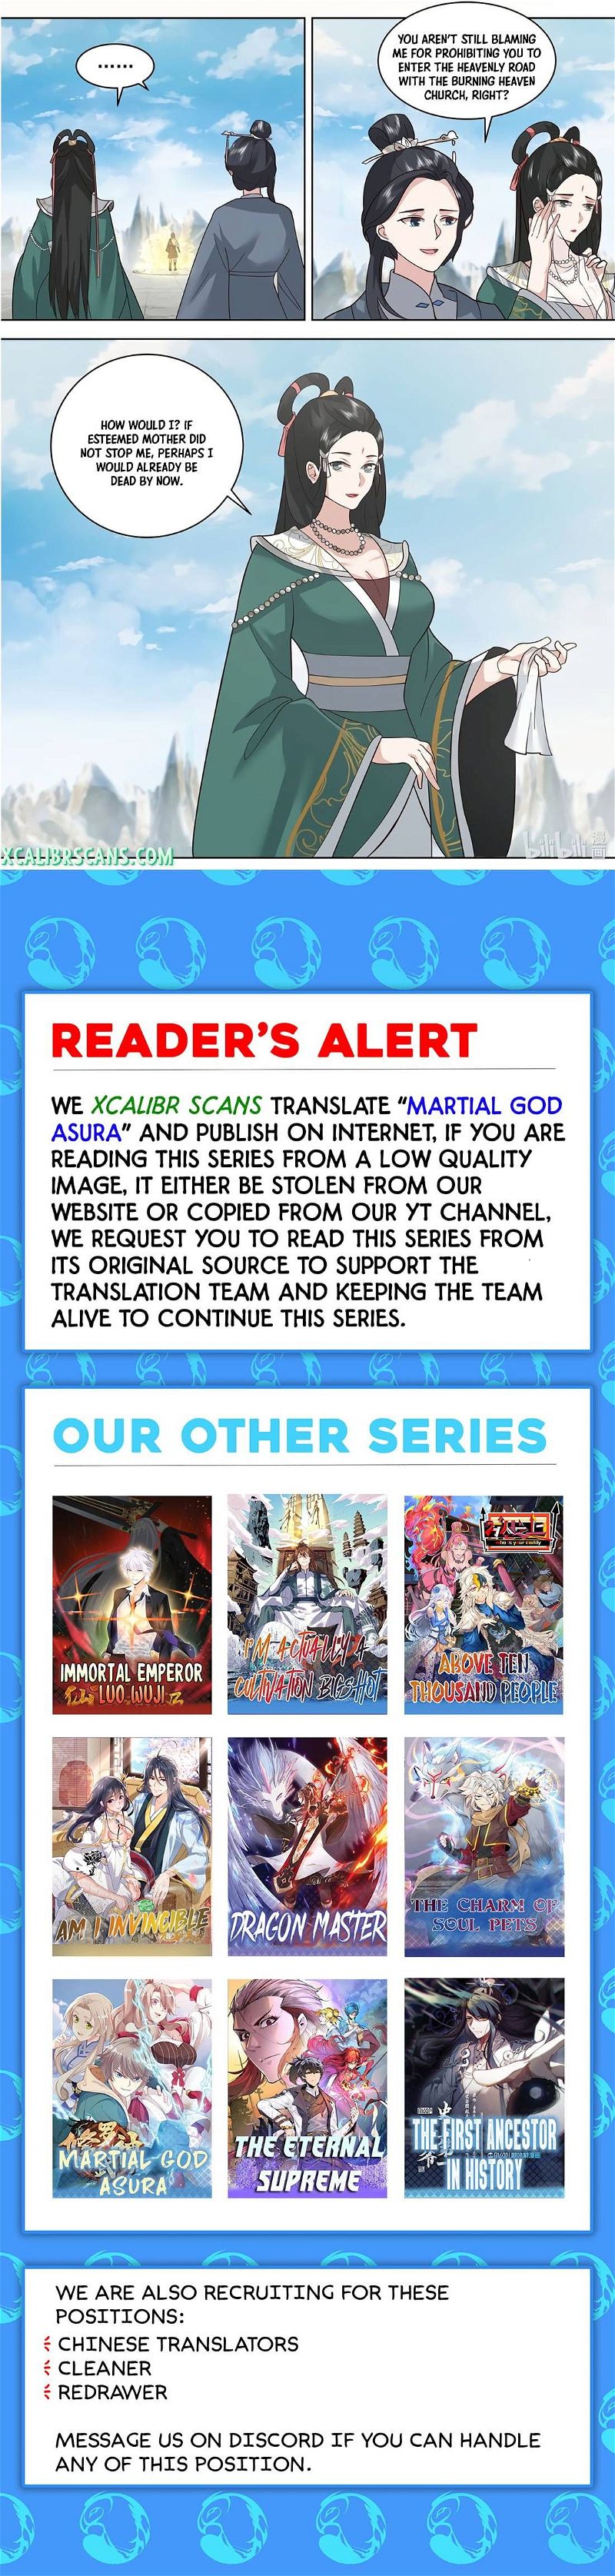 Martial God Asura Chapter 485 page 10